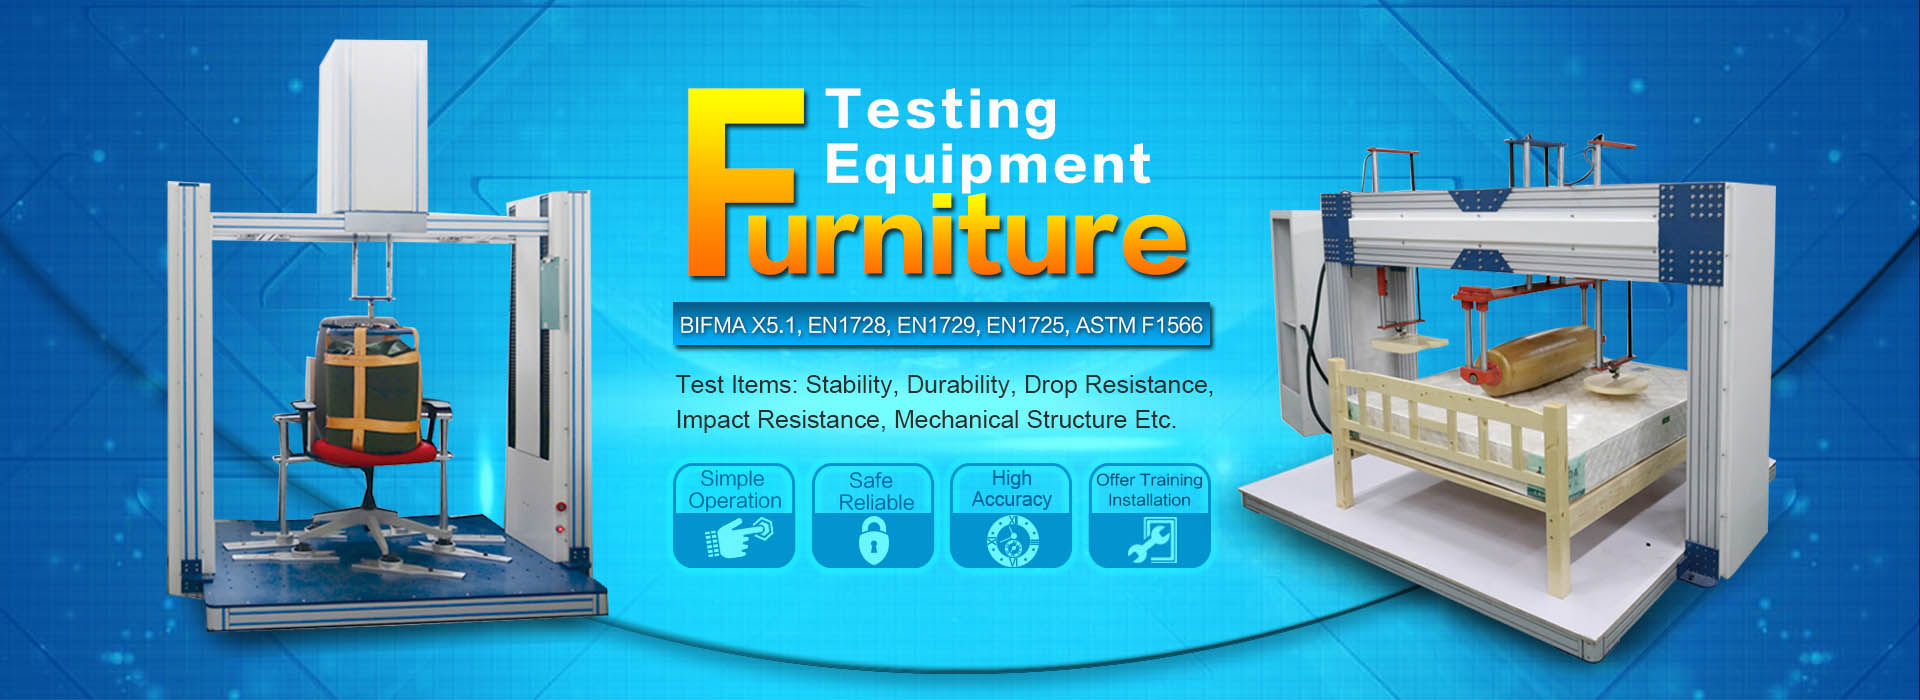 furniture testing equipment